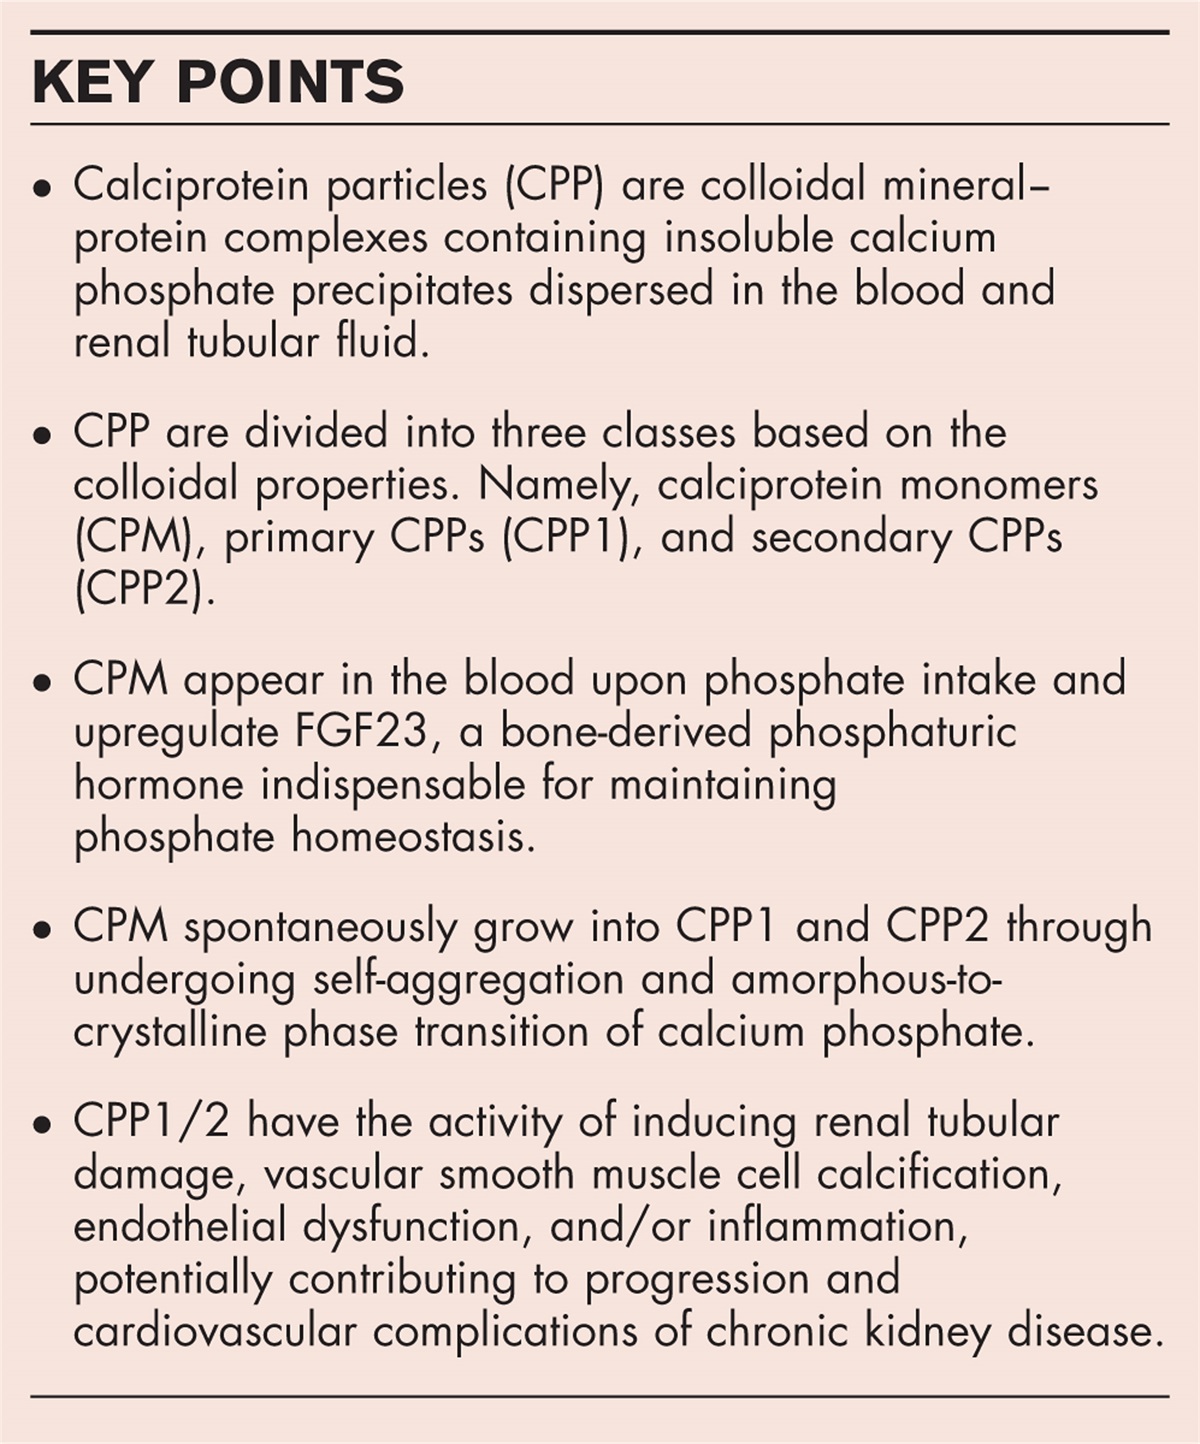 Calcium phosphate microcrystallopathy as a paradigm of chronic kidney disease progression